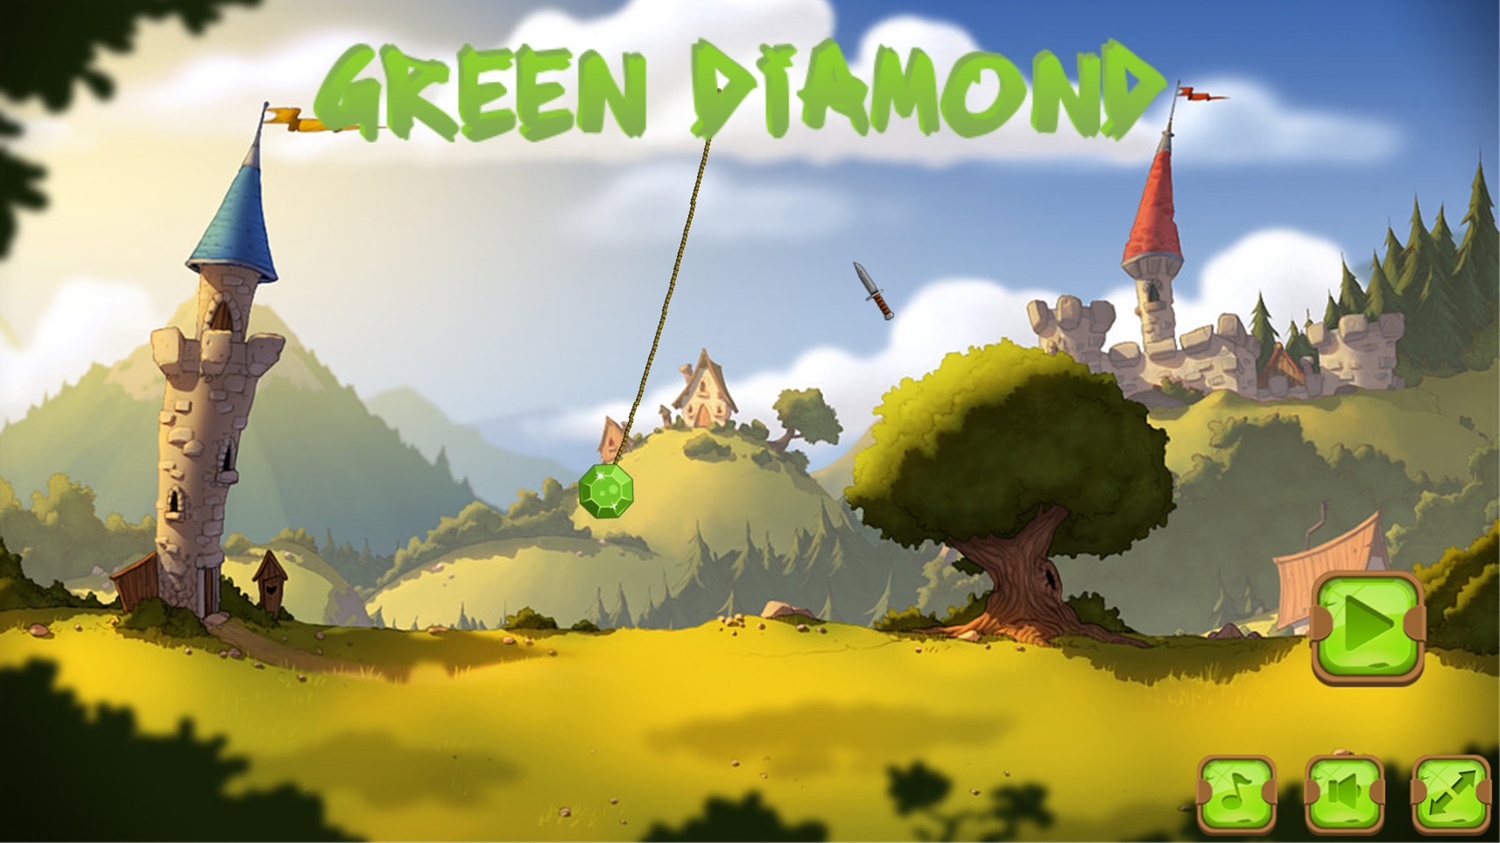 Green Diamond Game Welcome Screen Screenshot.